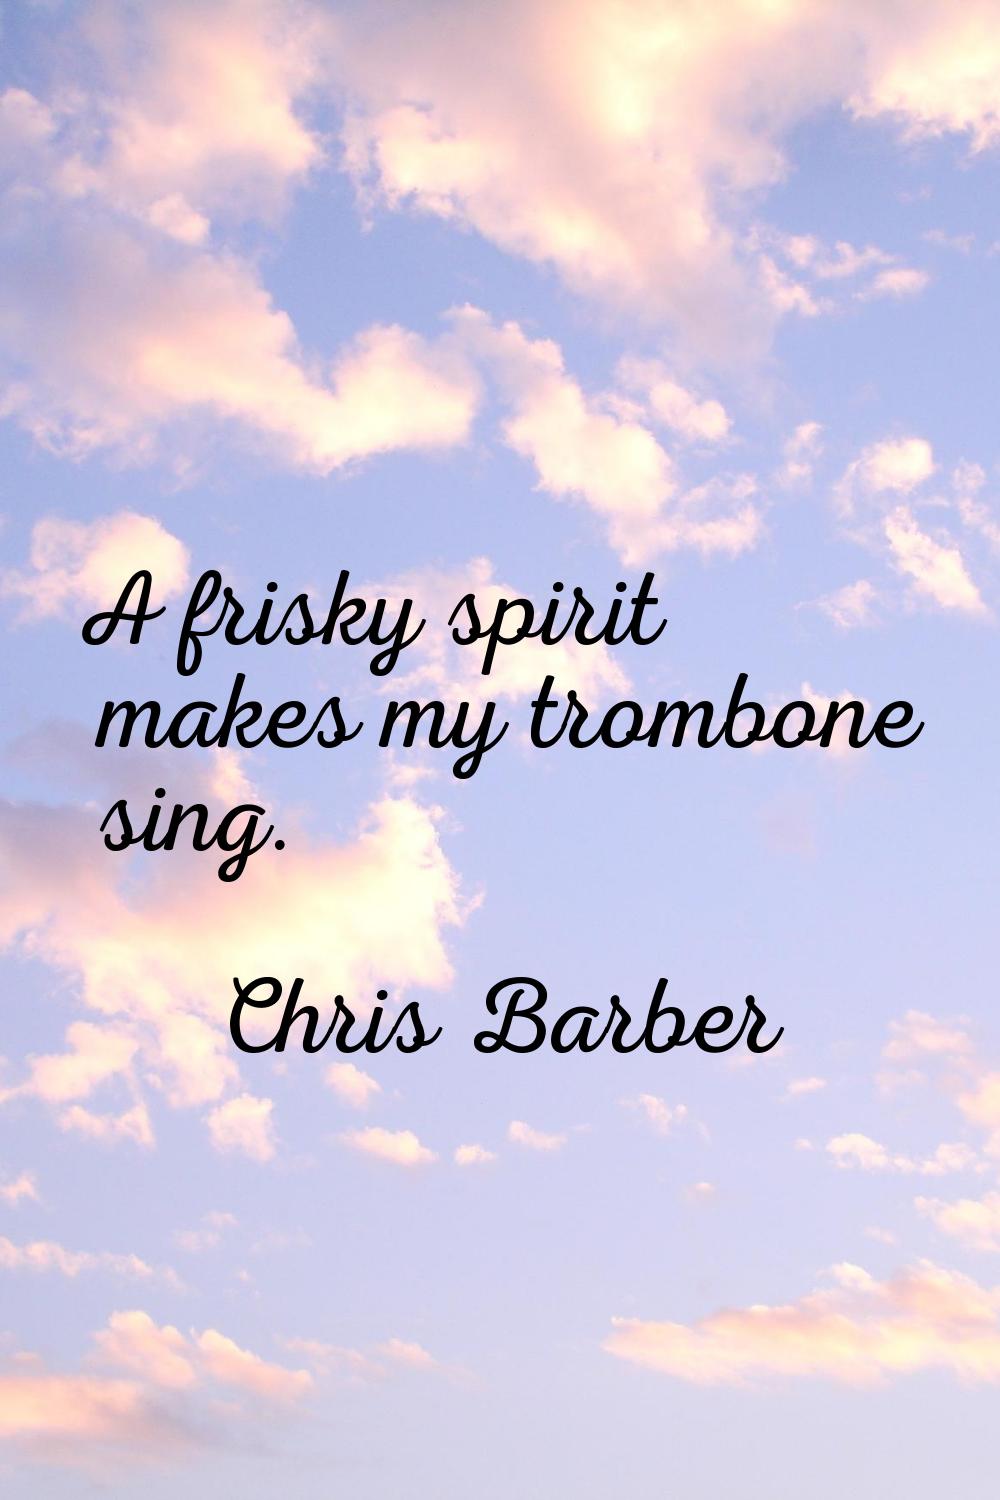 A frisky spirit makes my trombone sing.